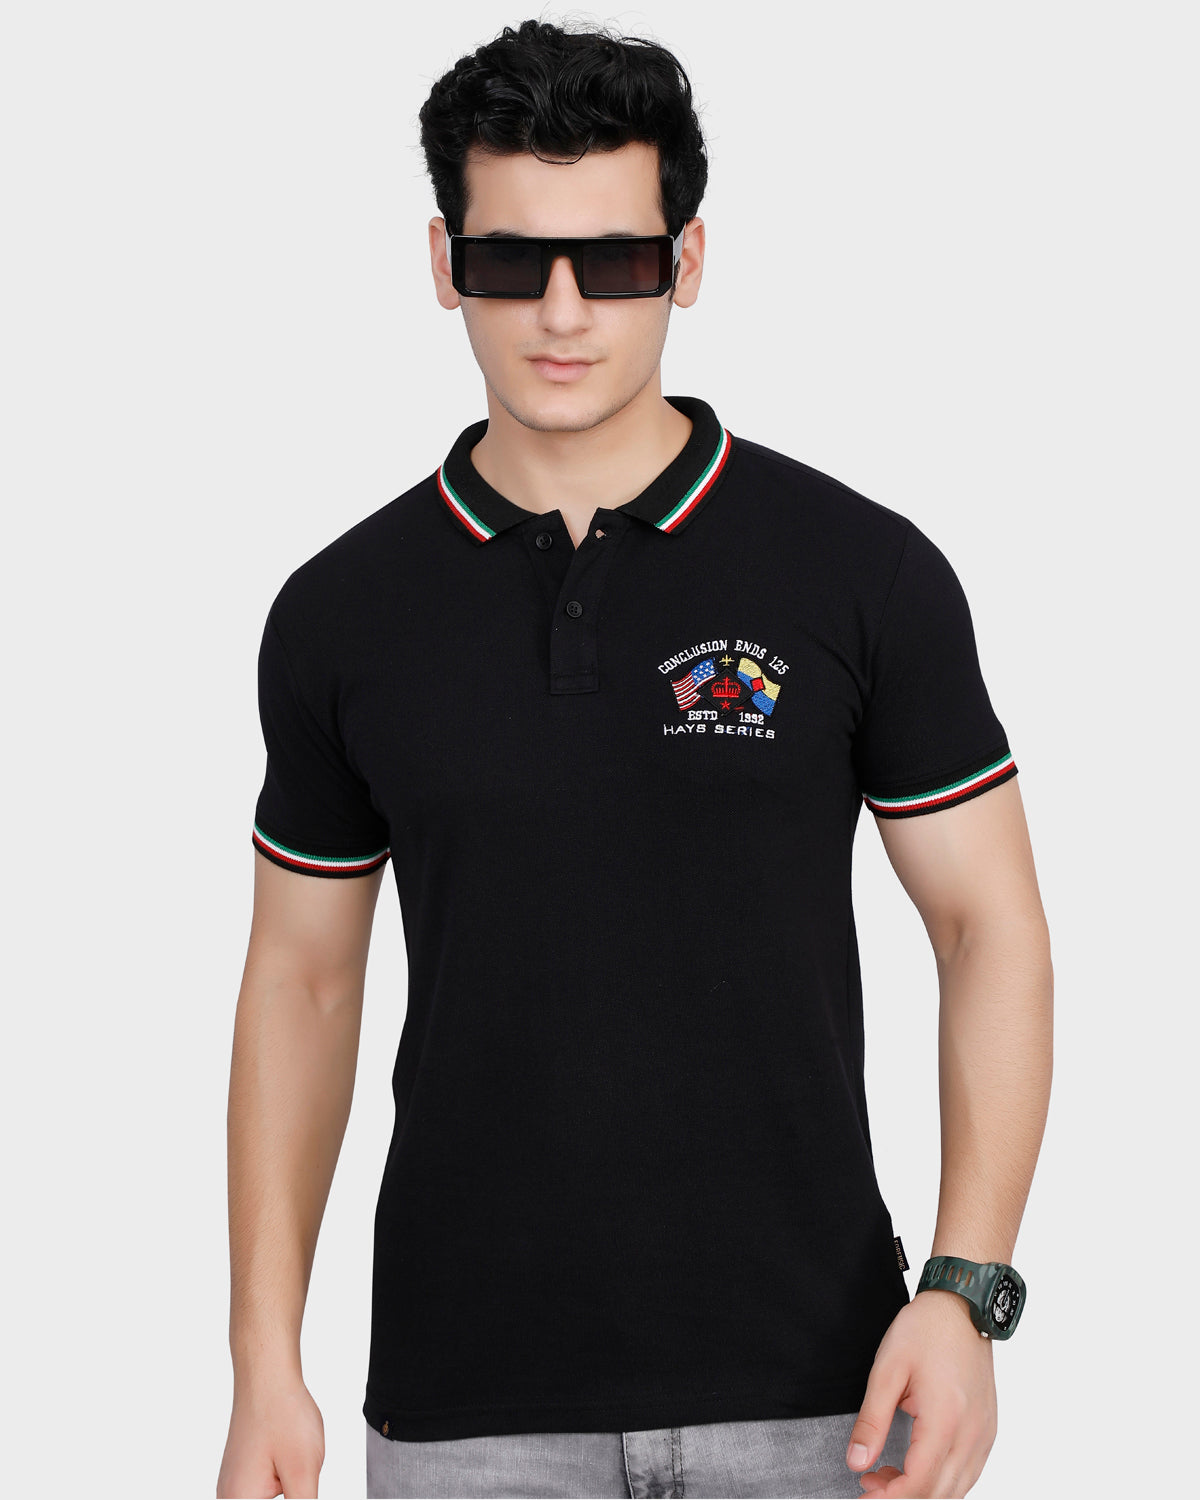 Men's Black Solid Cotton Polo Shirt